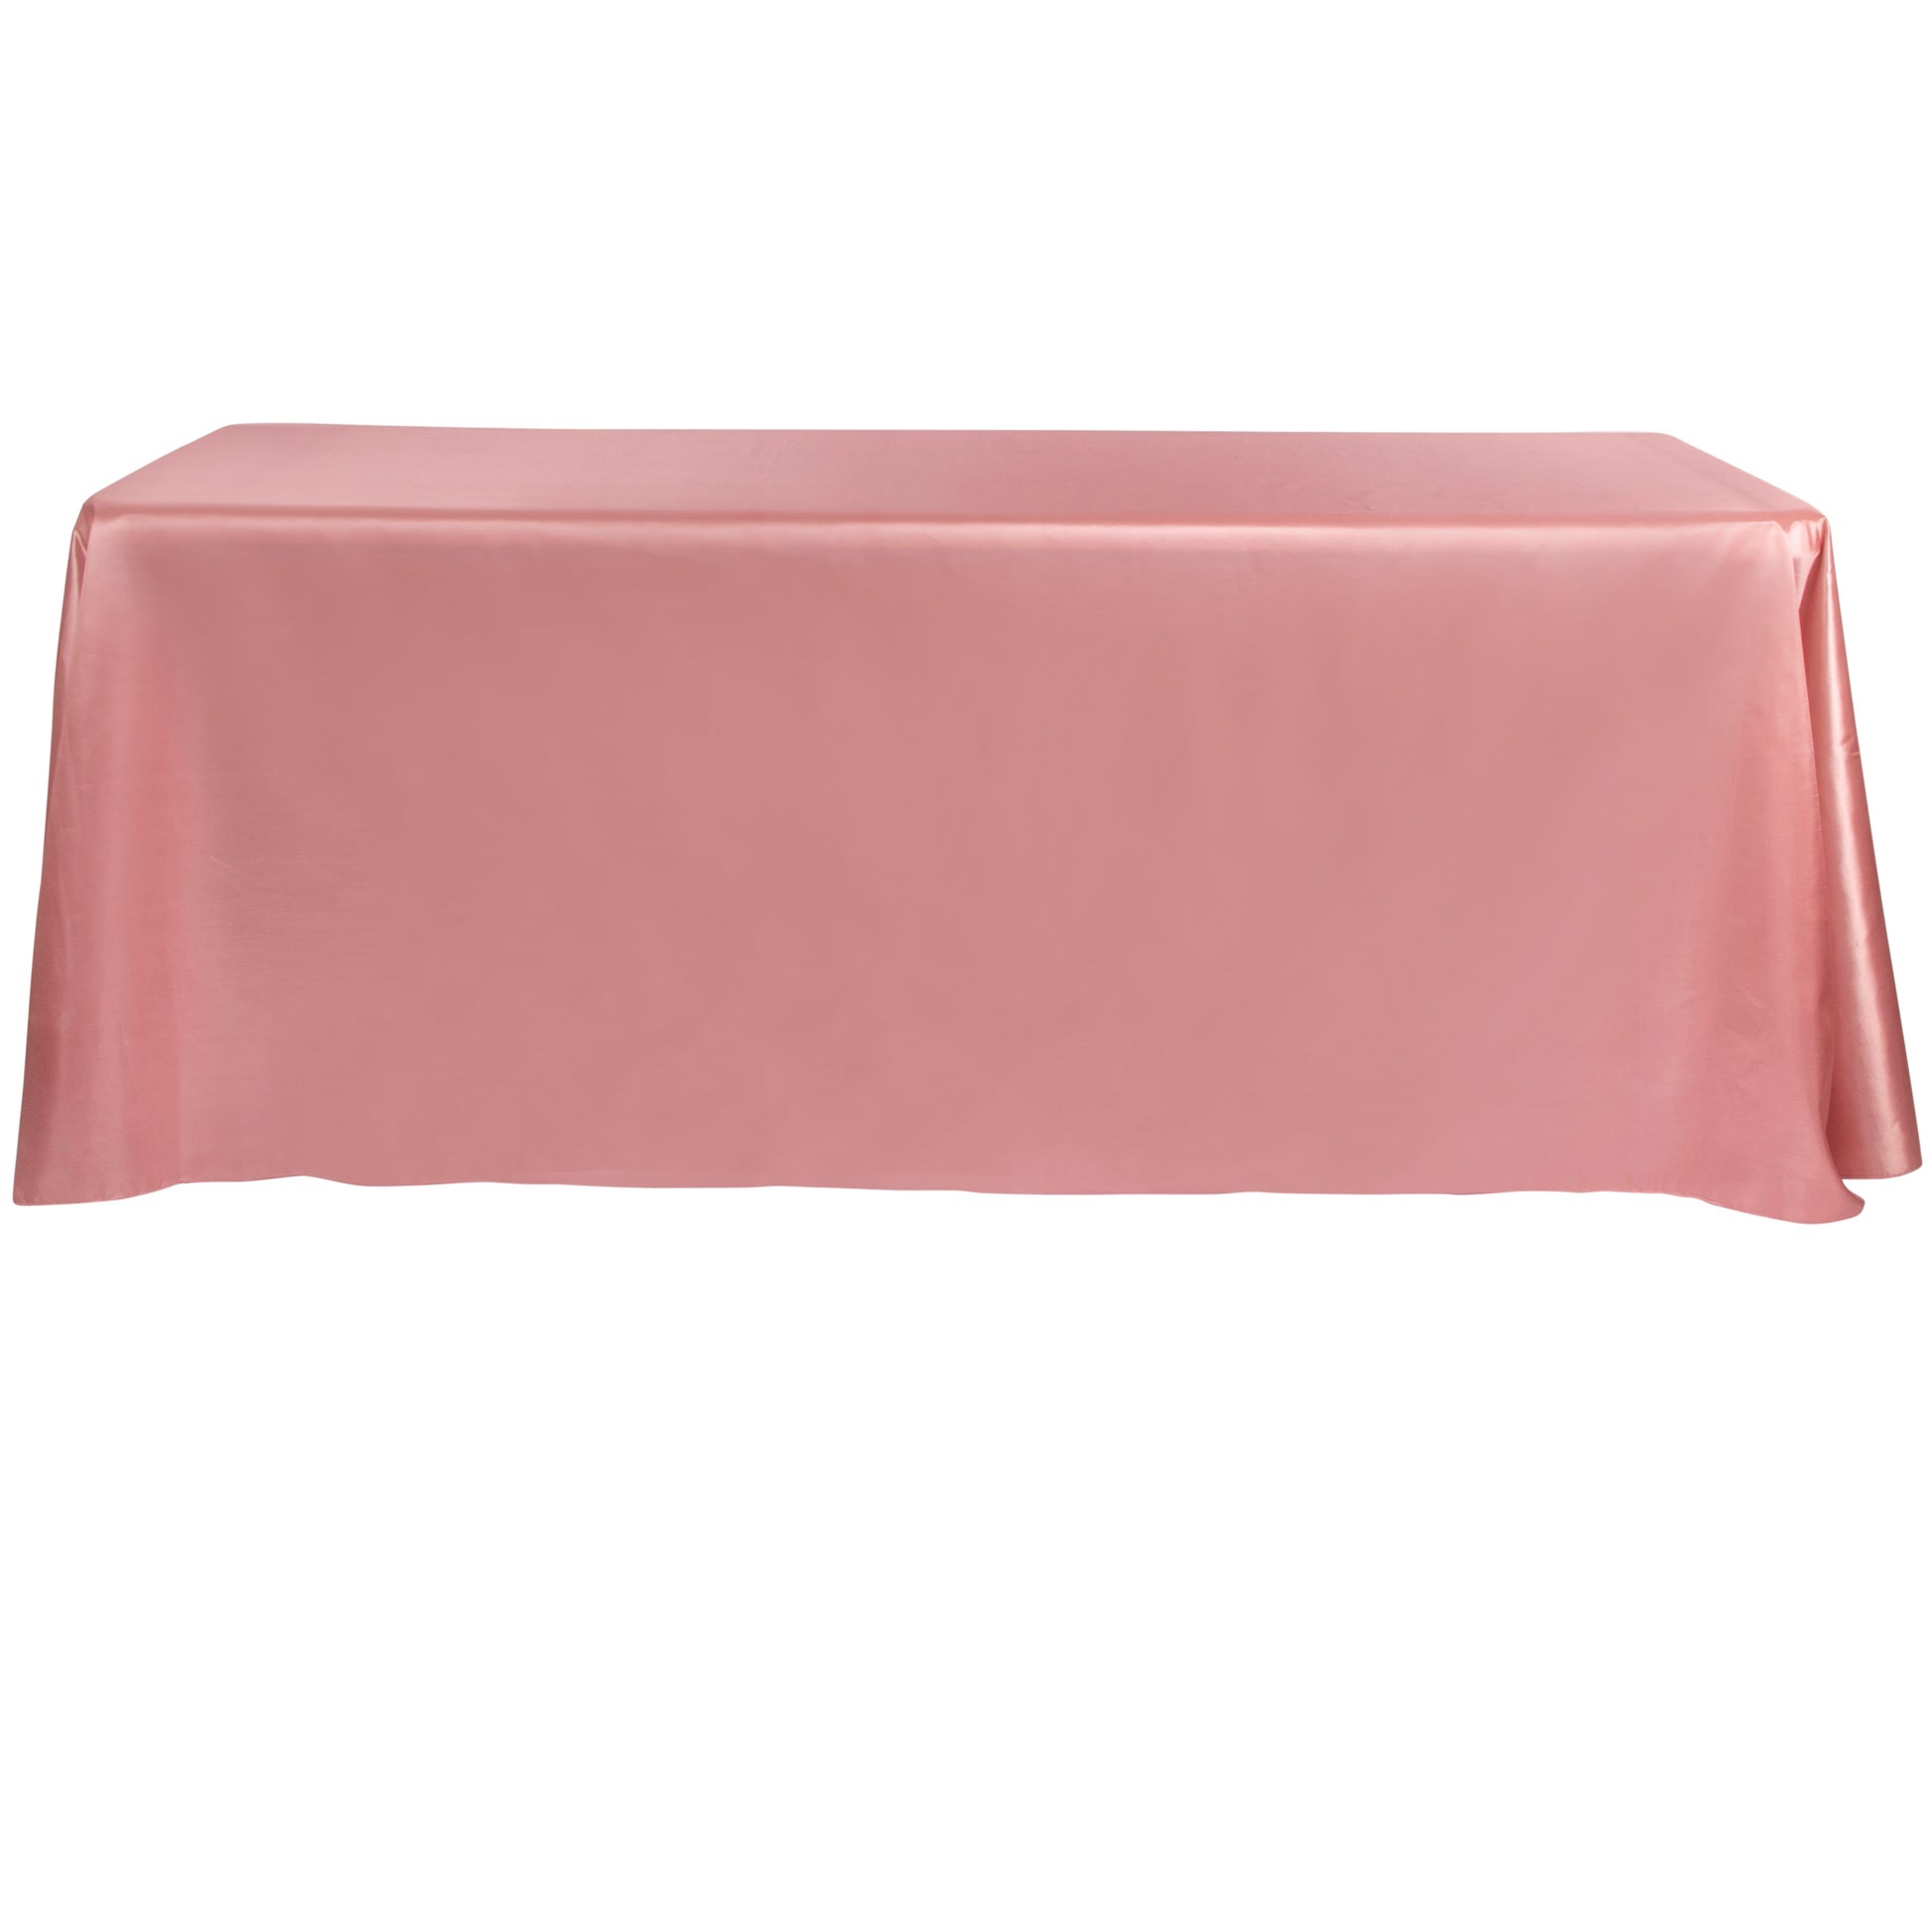 Taffeta Tablecloth 90"x132" Rectangular - Dusty Rose/Mauve